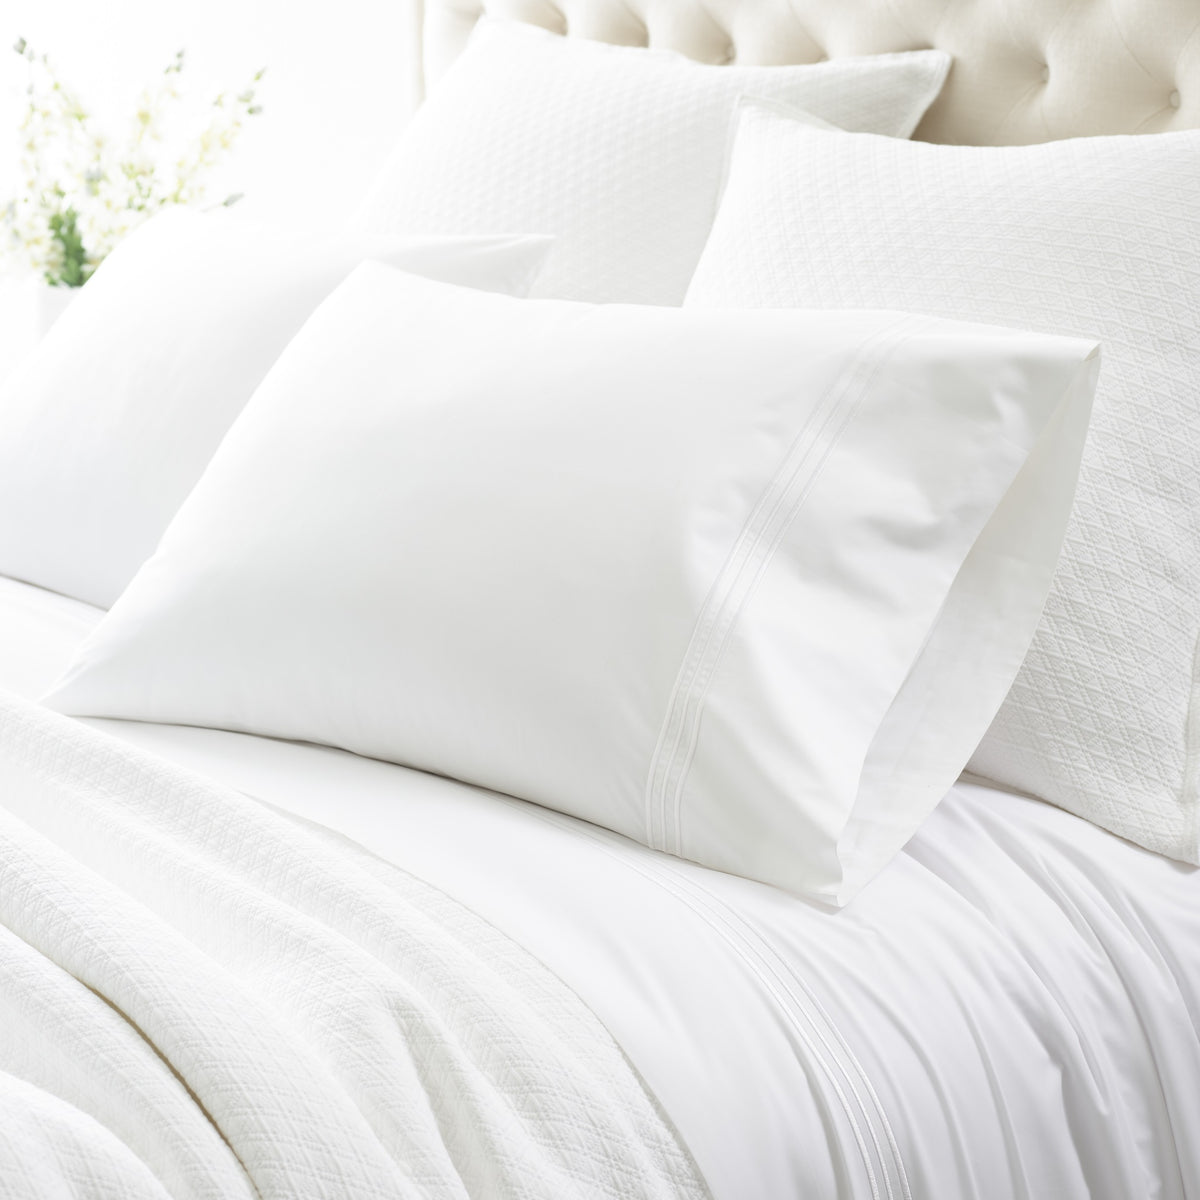 Pillowcase of Pine Cone Hill Trio in Bed in Color White